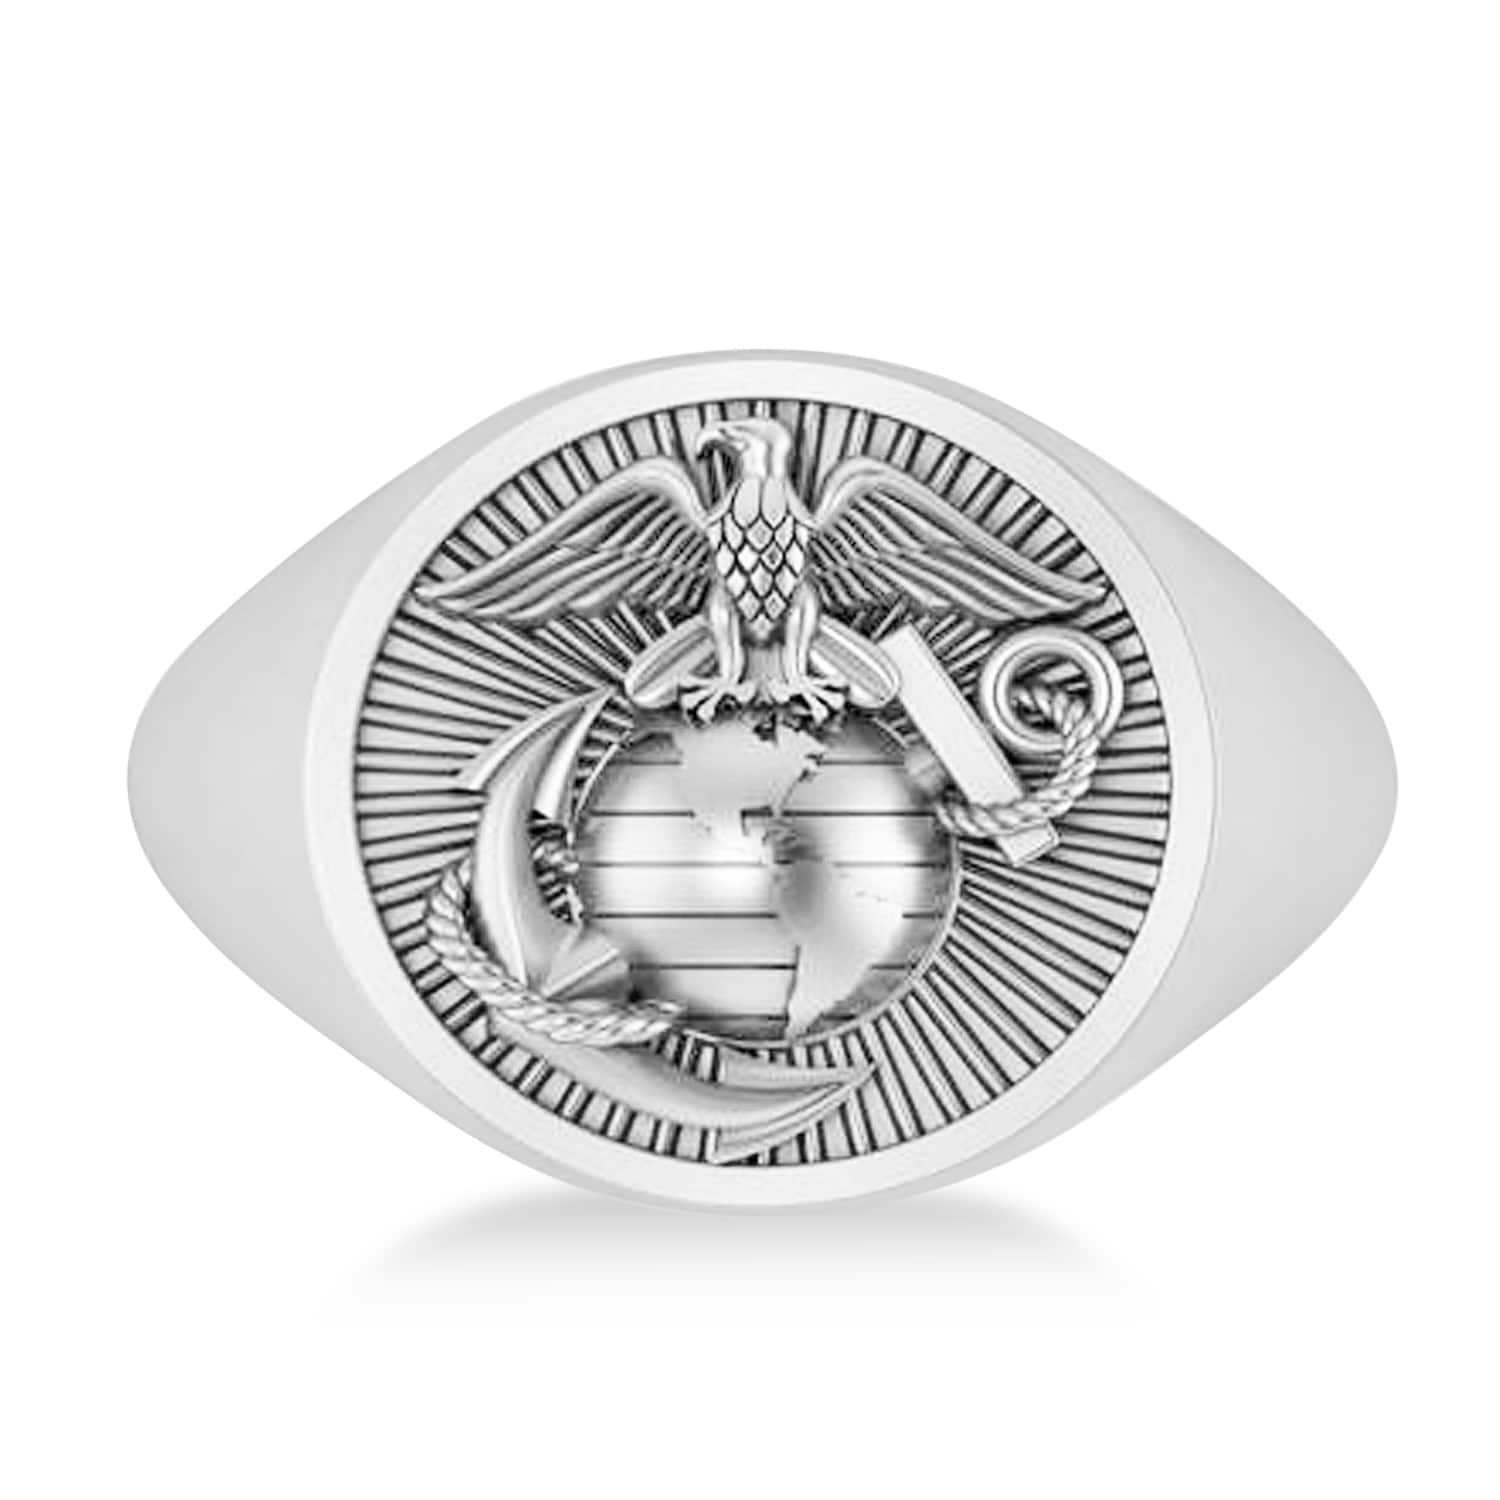 United States Marine Corps Men's Signet Fashion Ring 14k White Gold